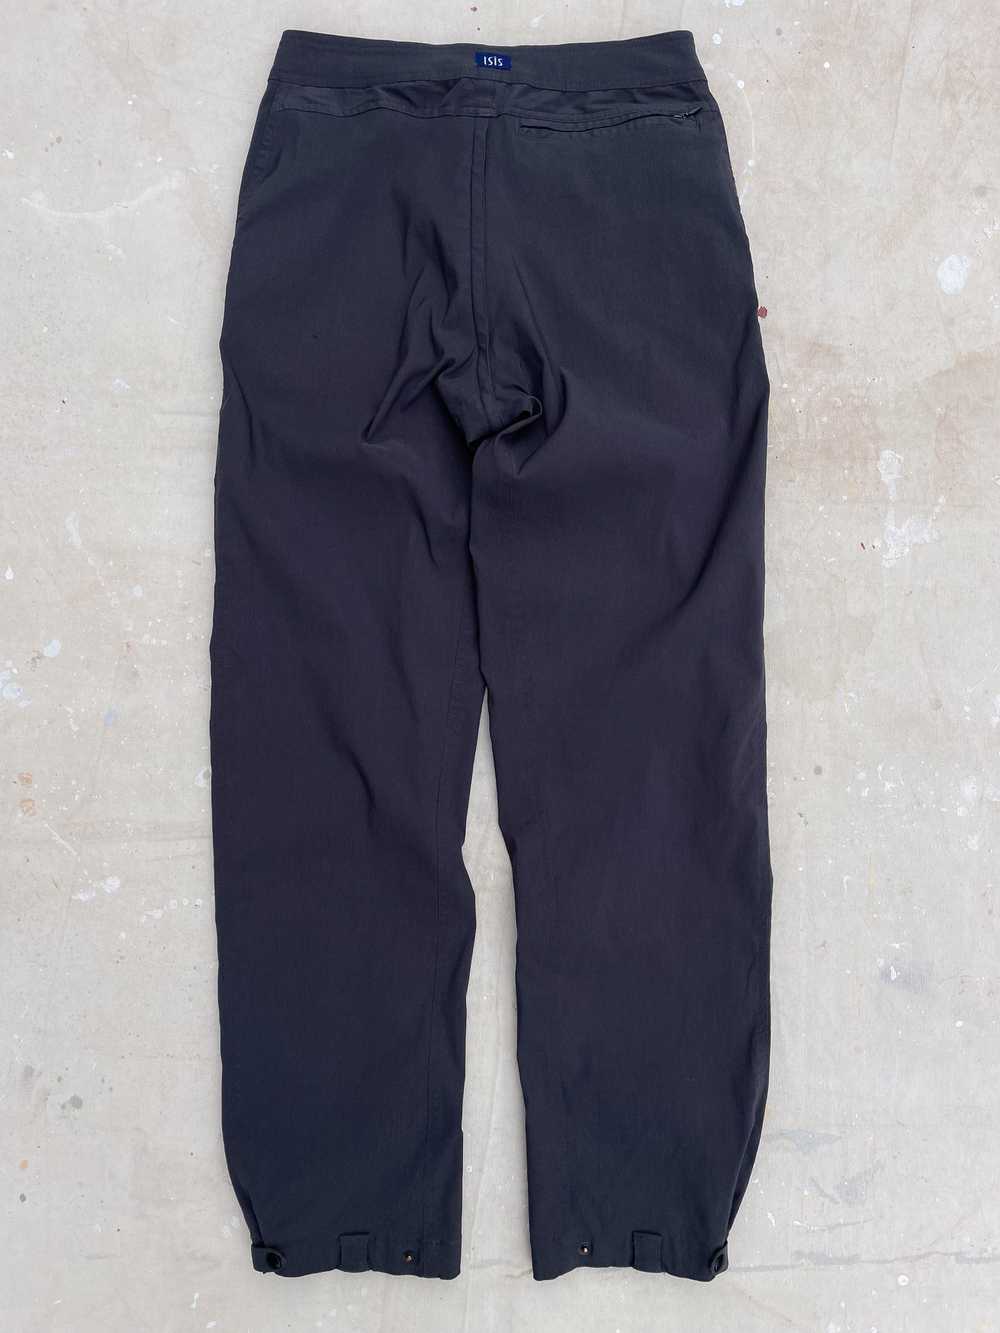 Isis Full Crotch Zip Tech Pants—[28x31] - image 4